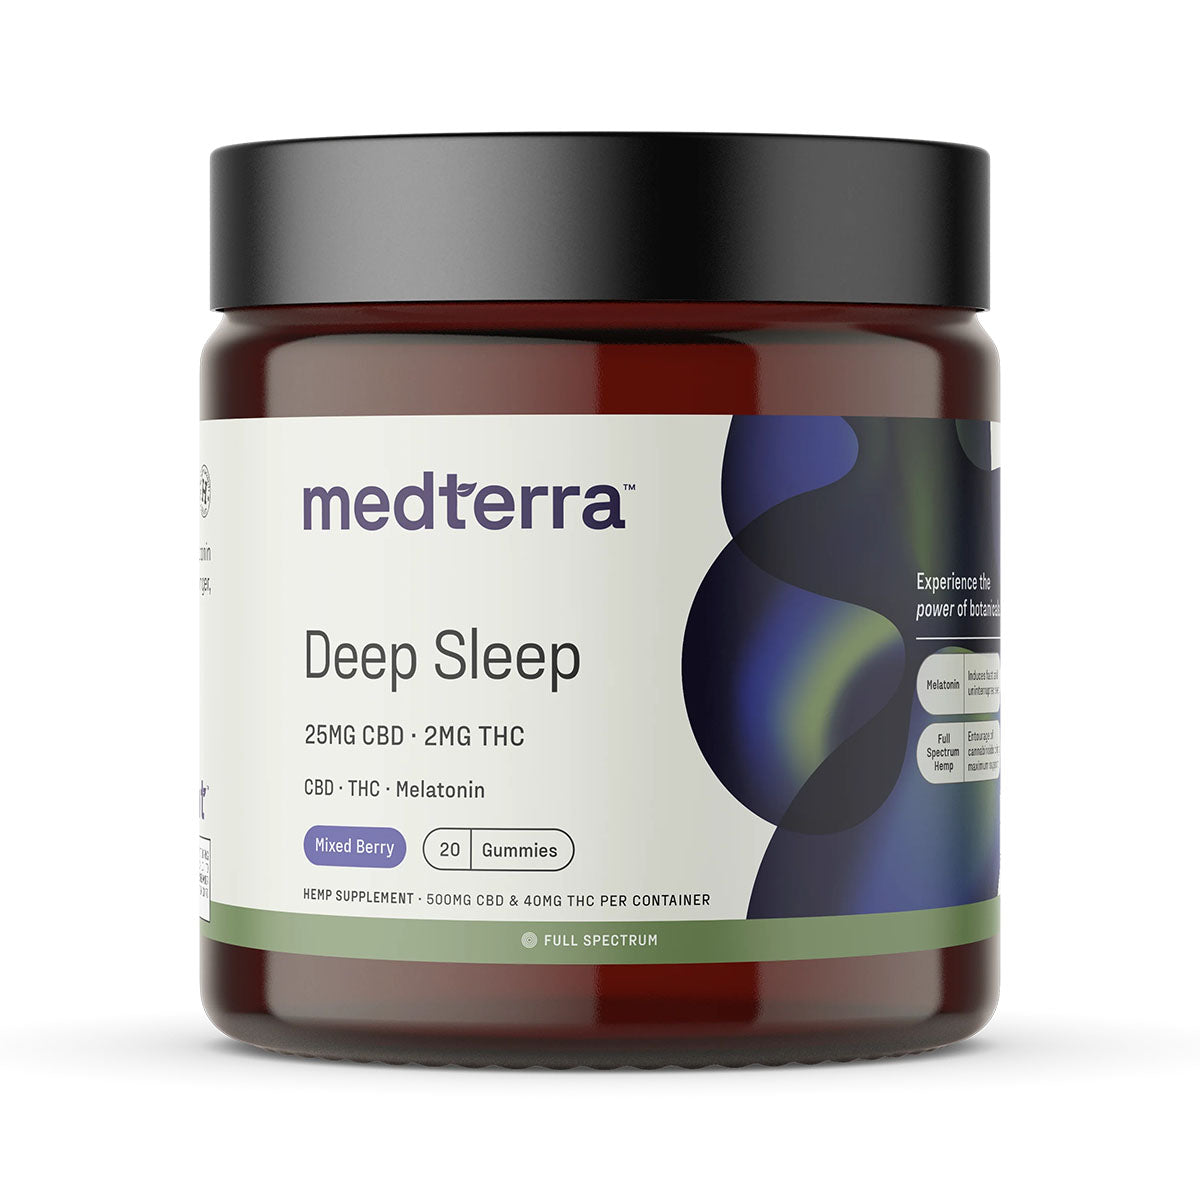 a jar of Medterra Deep Sleep Gummies in Mixed Berry variant